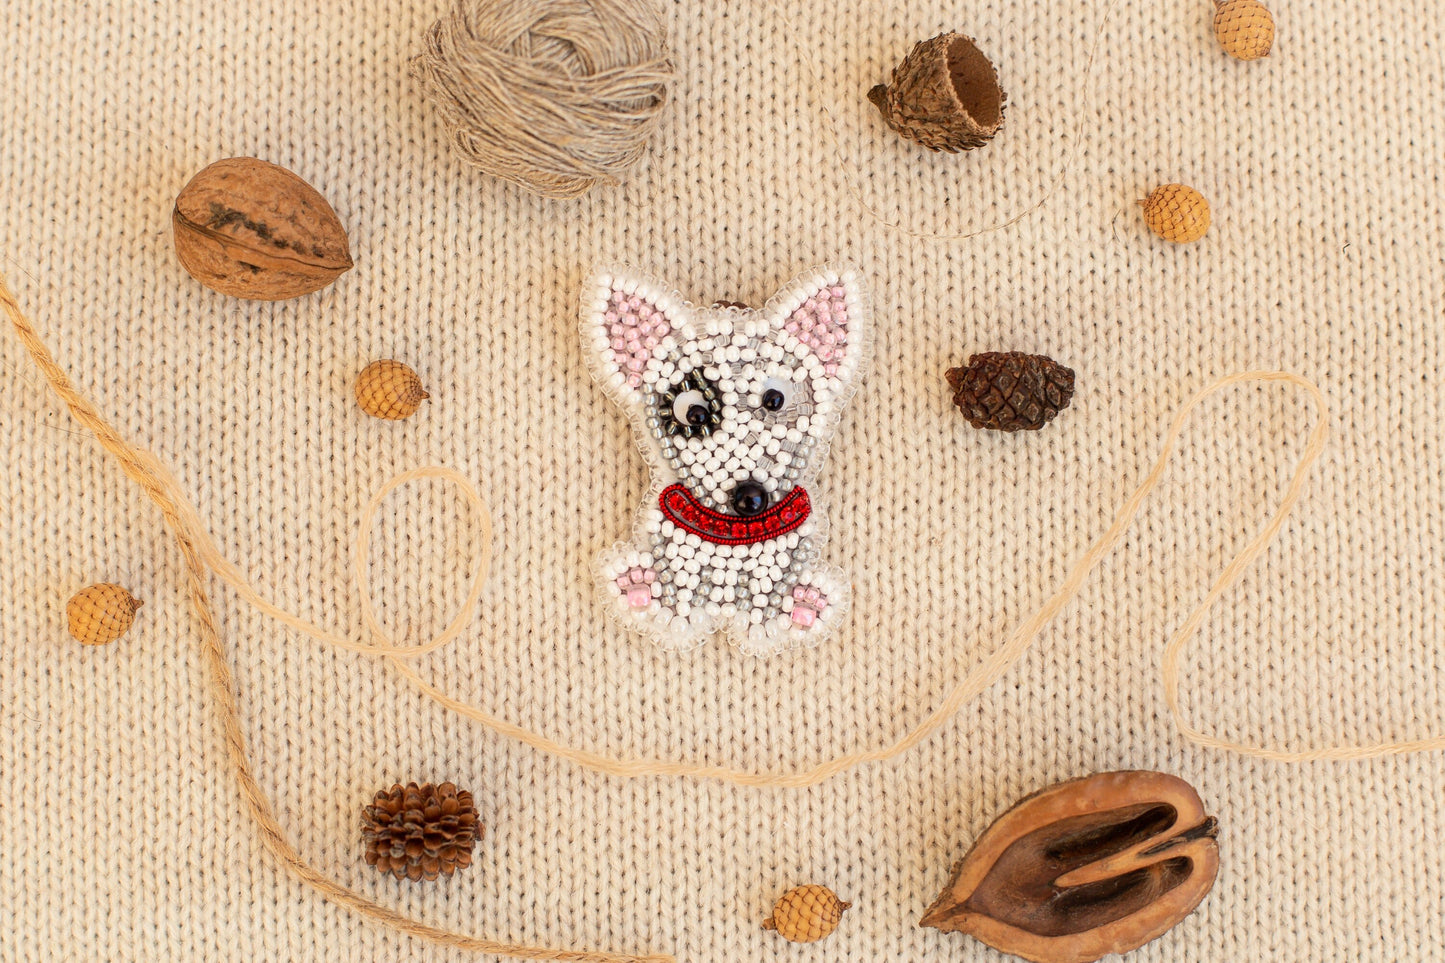 Bull Terrier Dog Bead embroidery kit. Seed Bead Brooch kit. DIY Craft kit. Beadweaving Kit. Needlework beading. Handmade Jewelry Making Kit